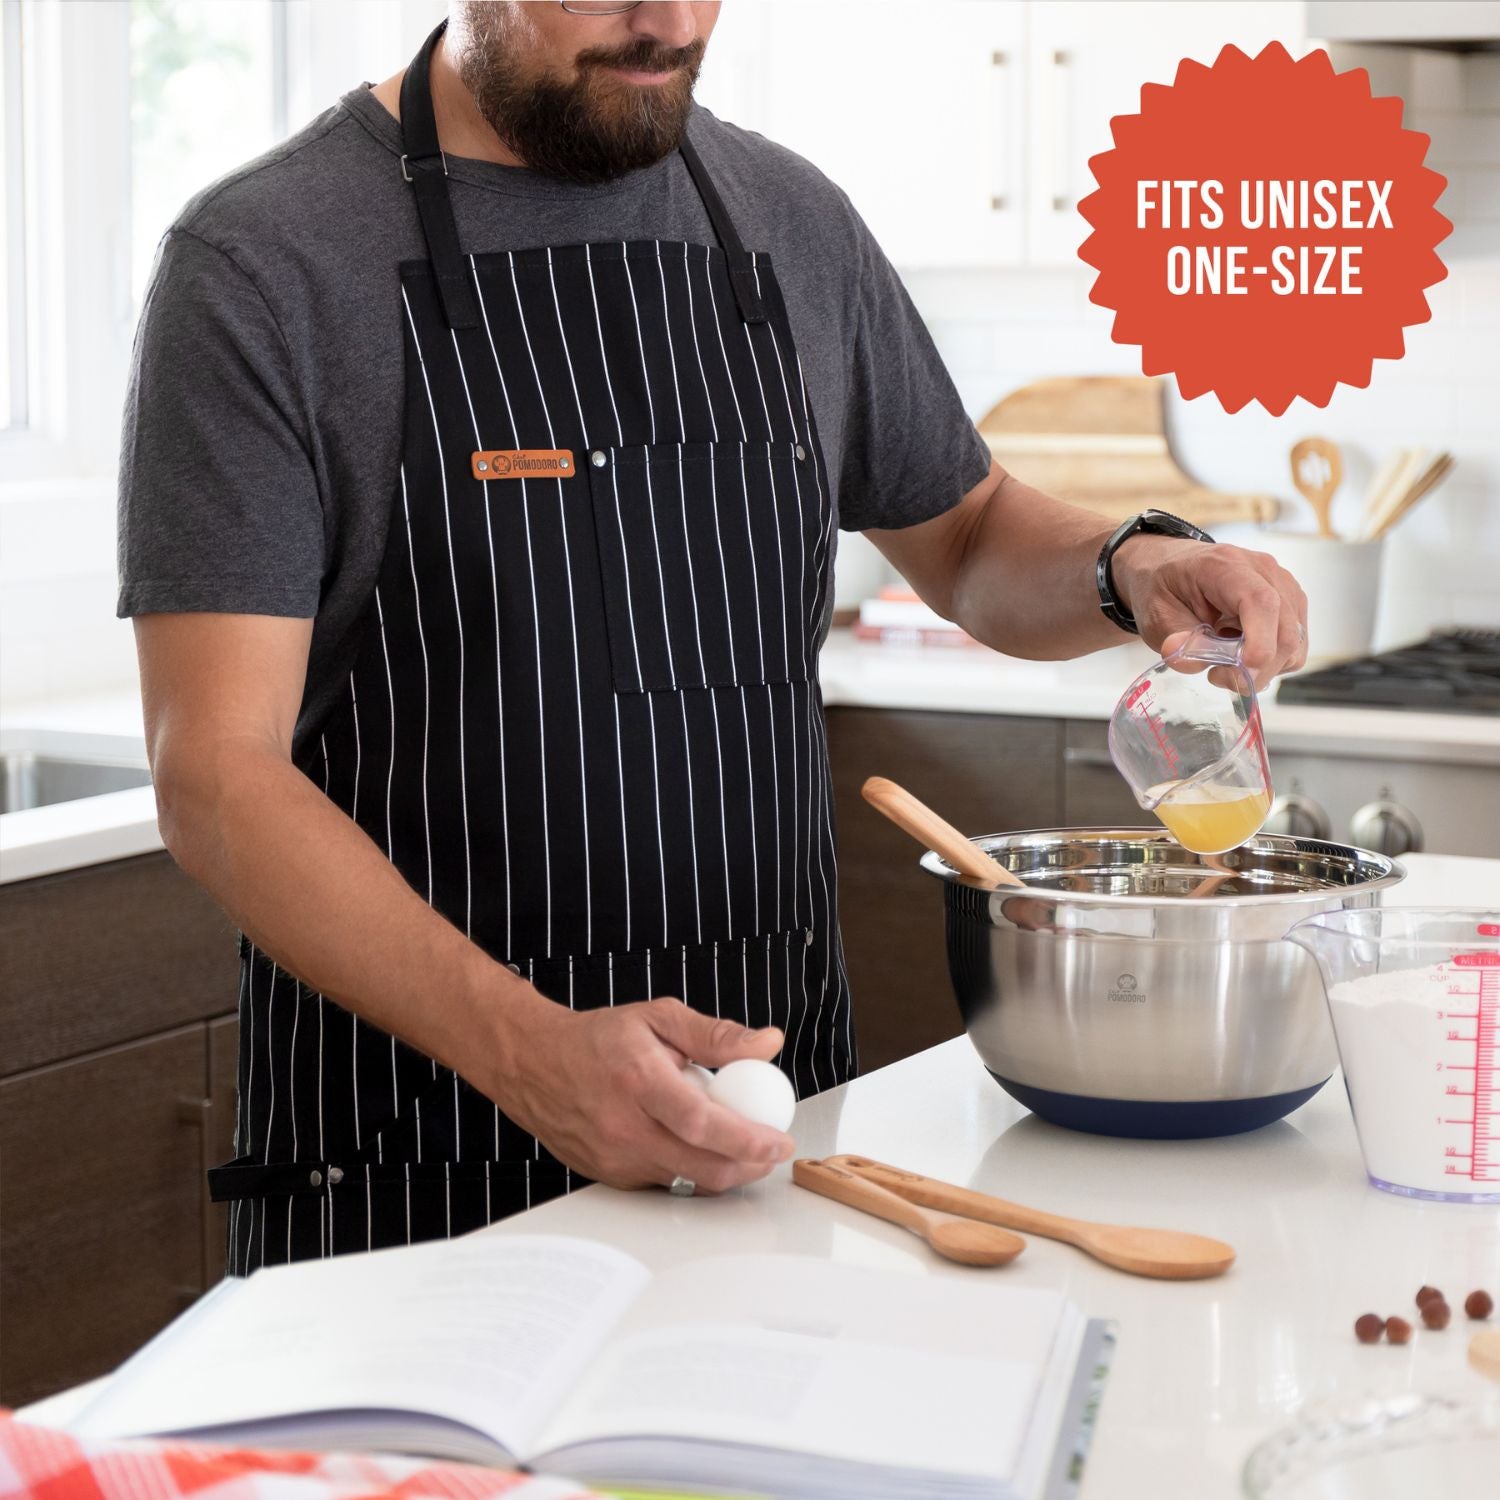 Unisex cooking apron